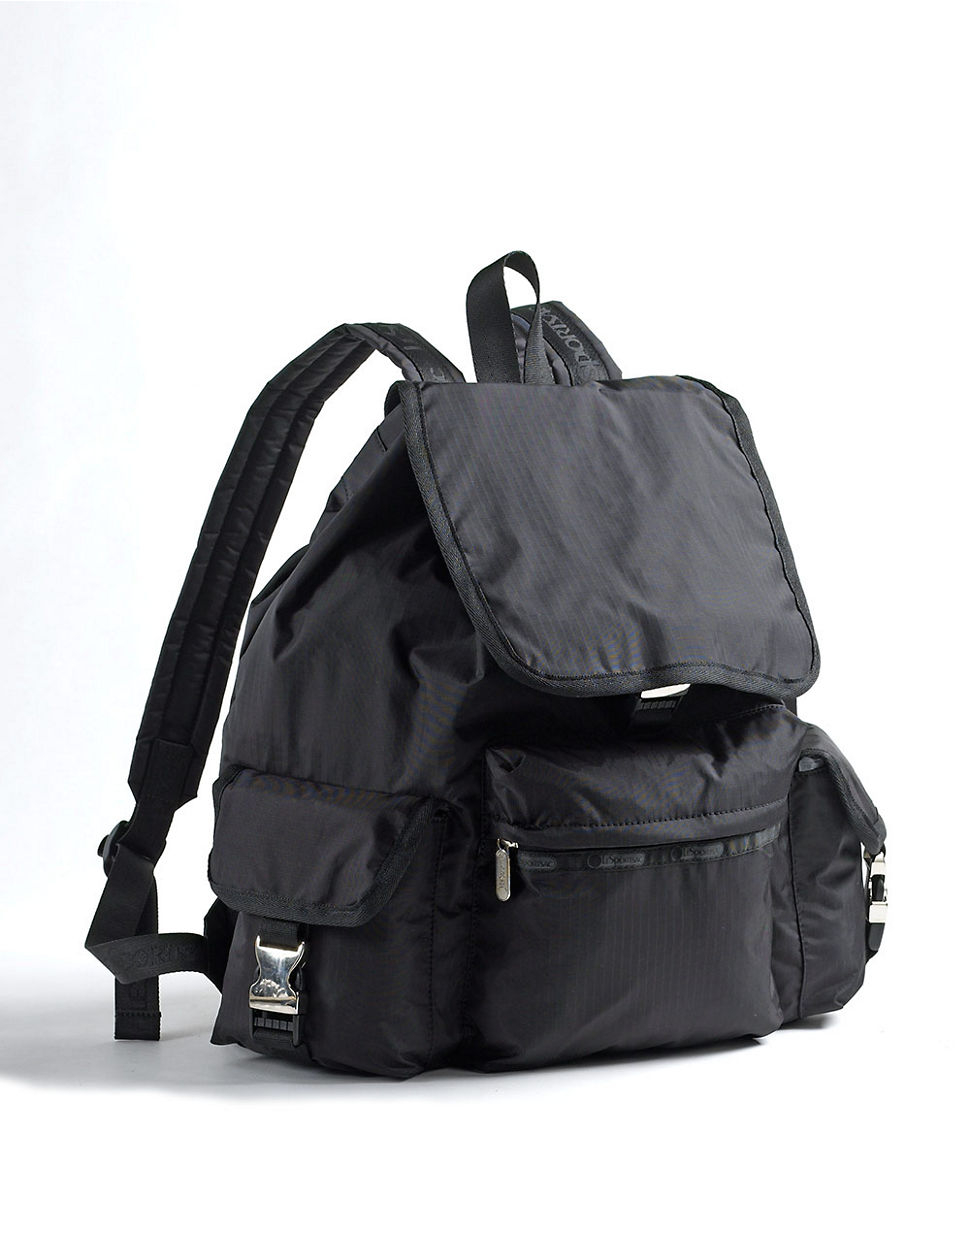 Lyst - Lesportsac Voyager Backpack in Black for Men